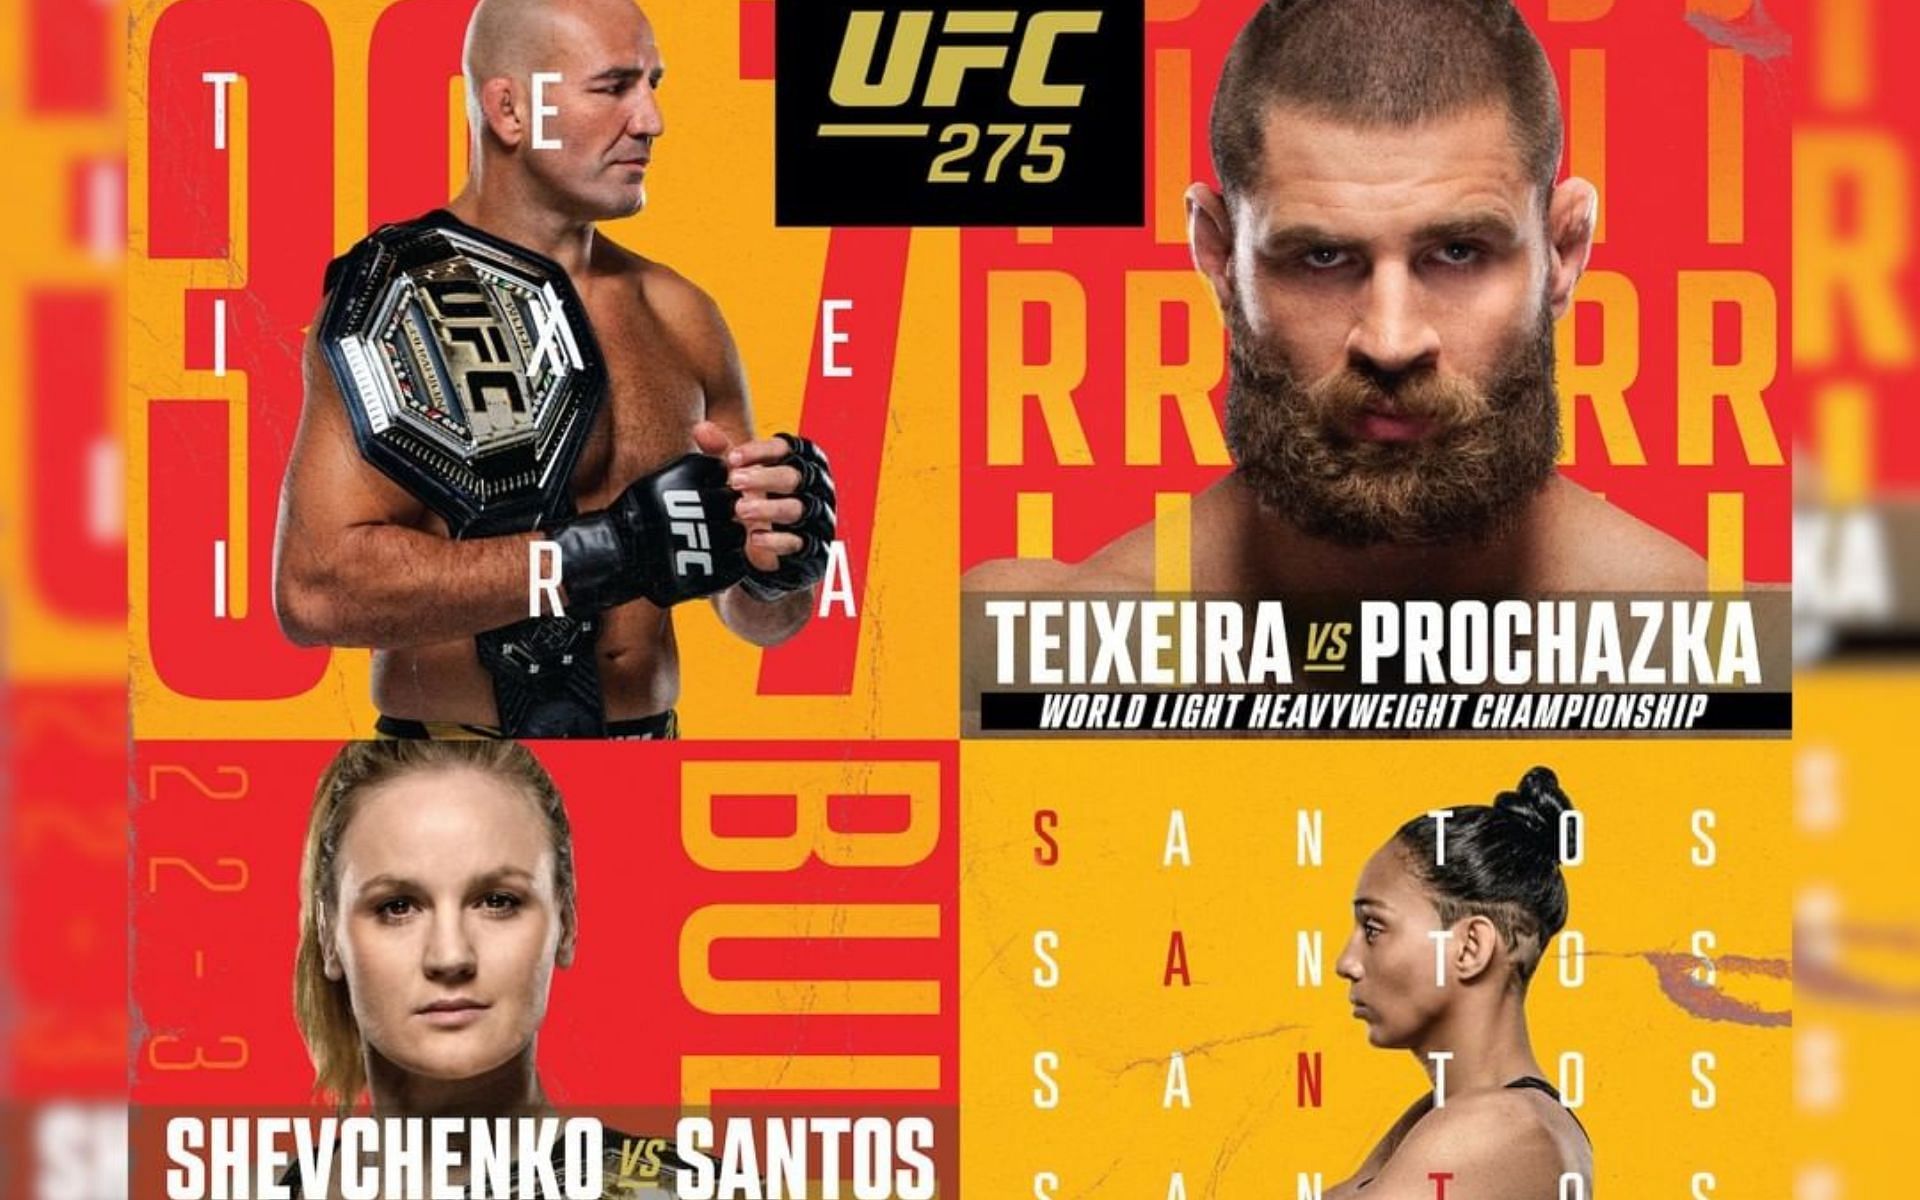 UFC 275 poster featuring Teixeira (top left) Prochazka (top right) Shevchenko (bottom left), Santos (bottom right) (image via Instagram@ufc)